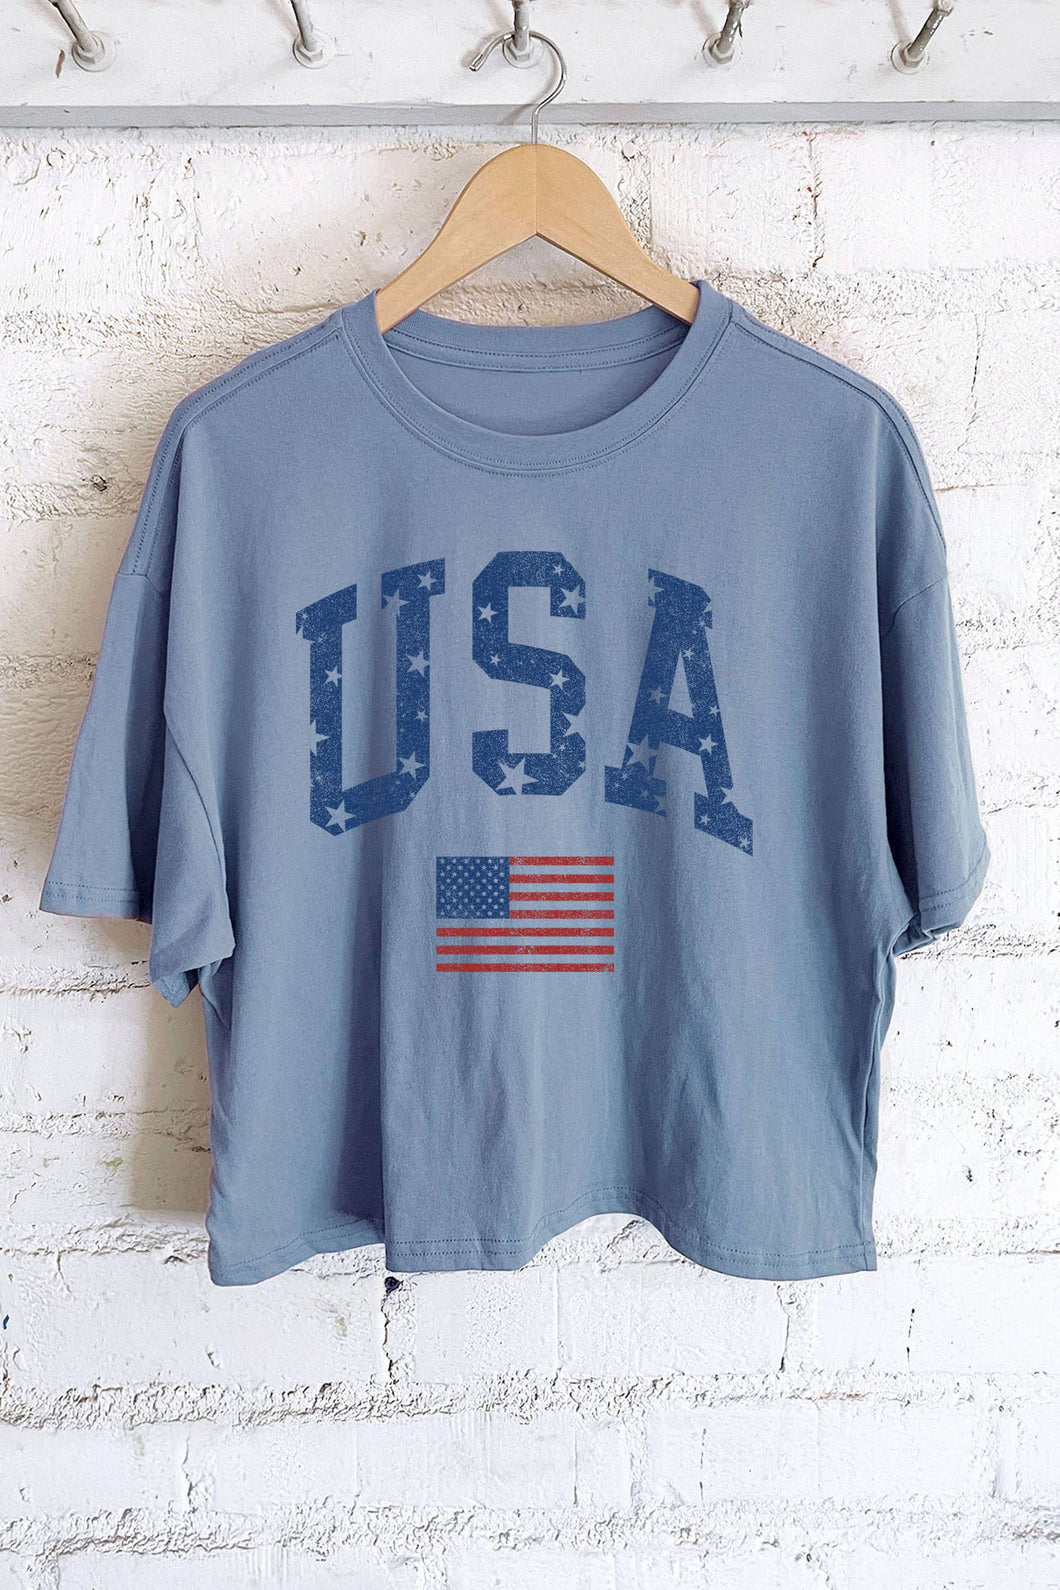 Rustee Clothing - USA Flag Tee